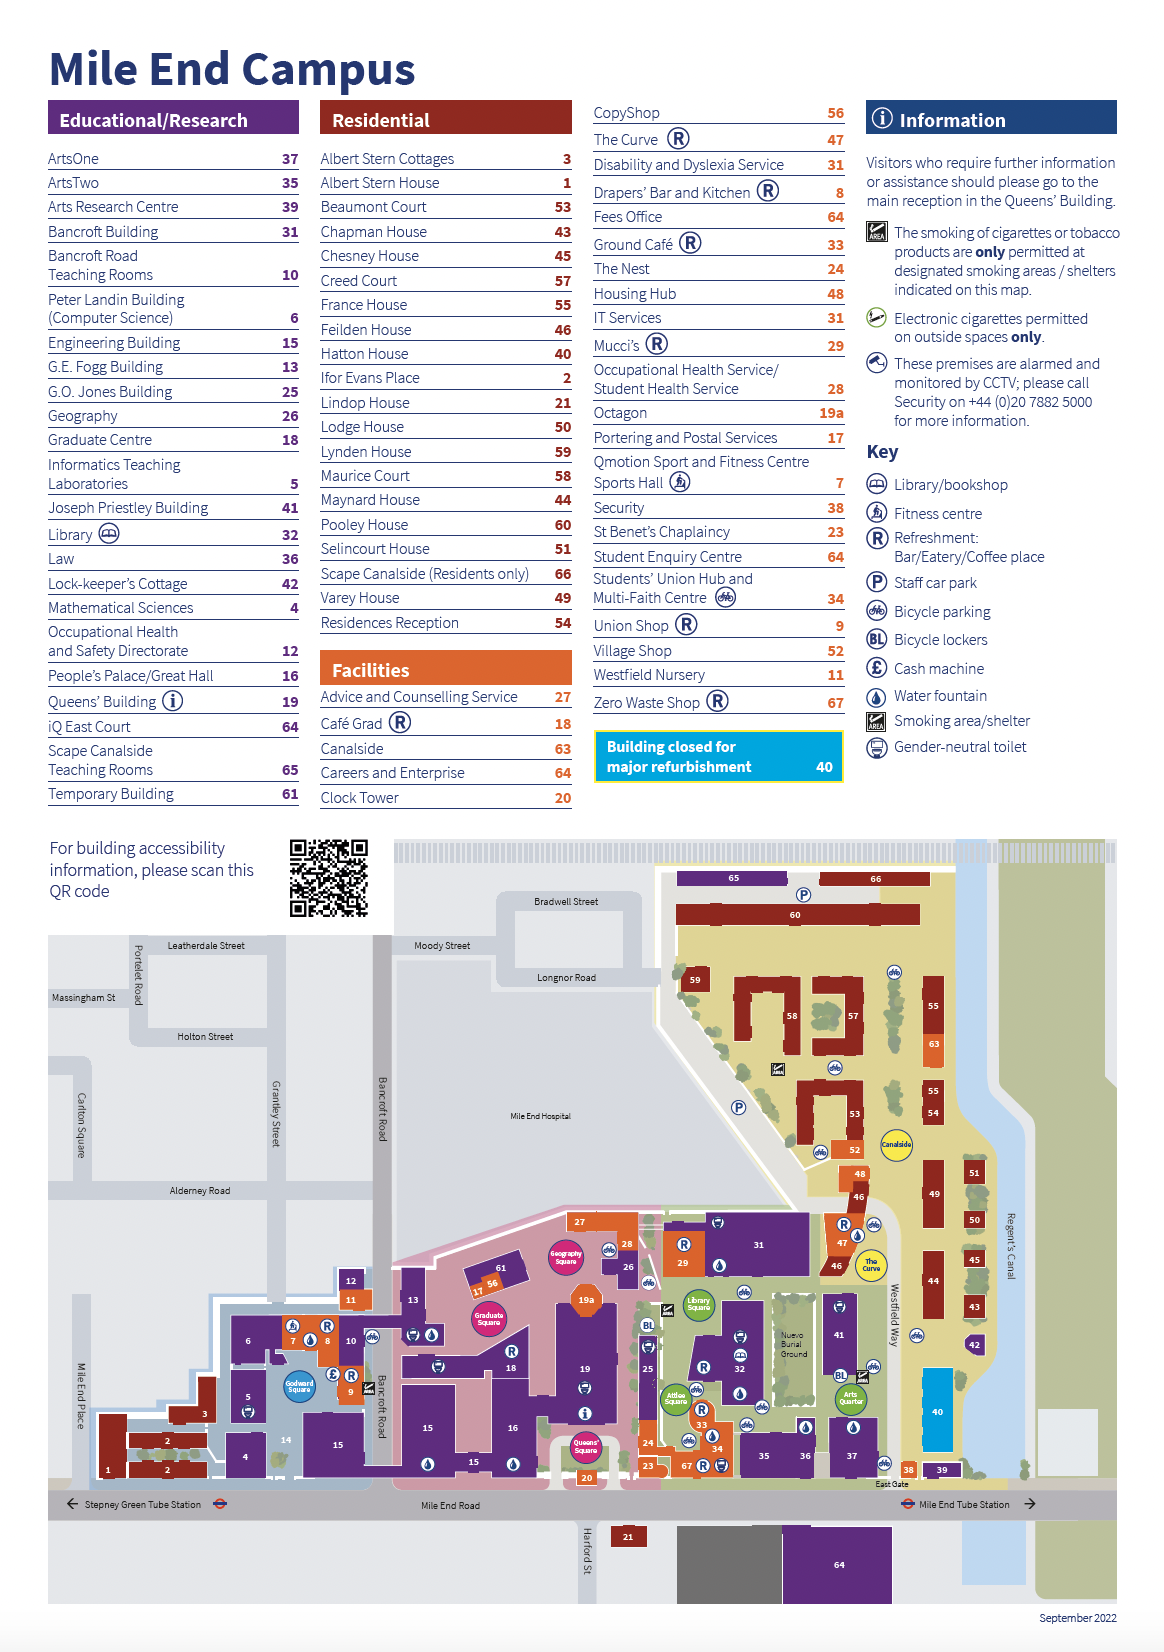 Mile End Campus map